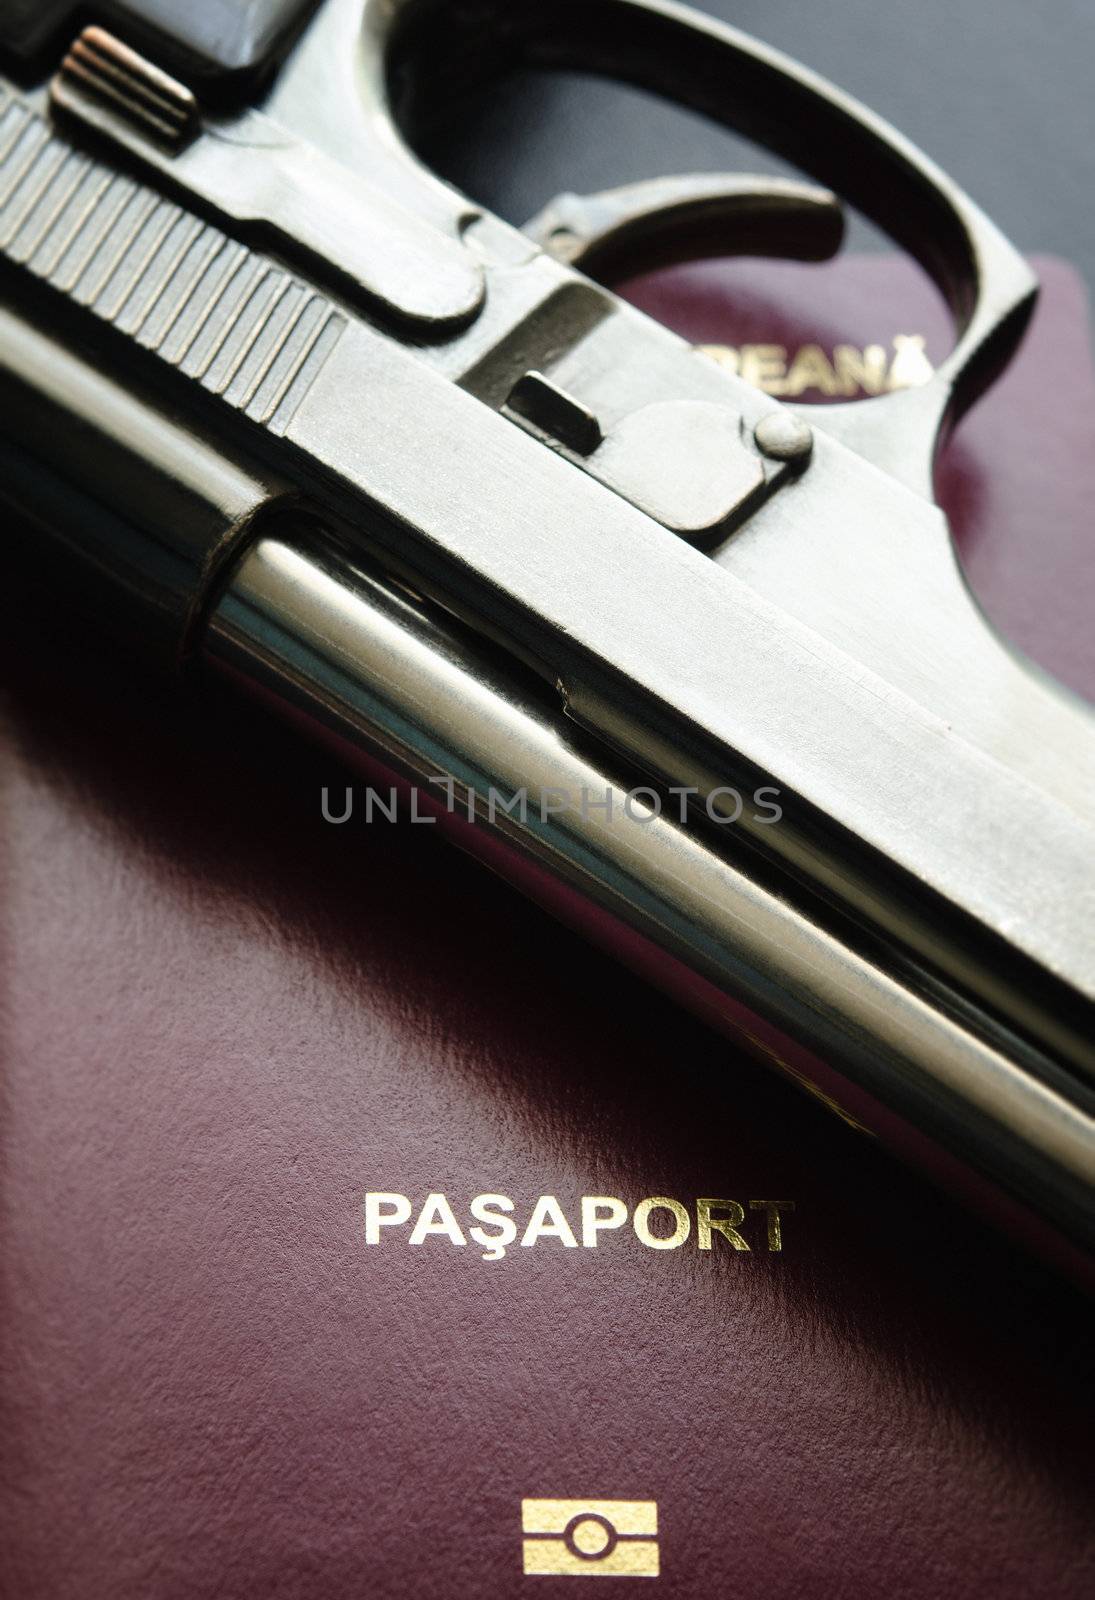 Passport and gun by silent47